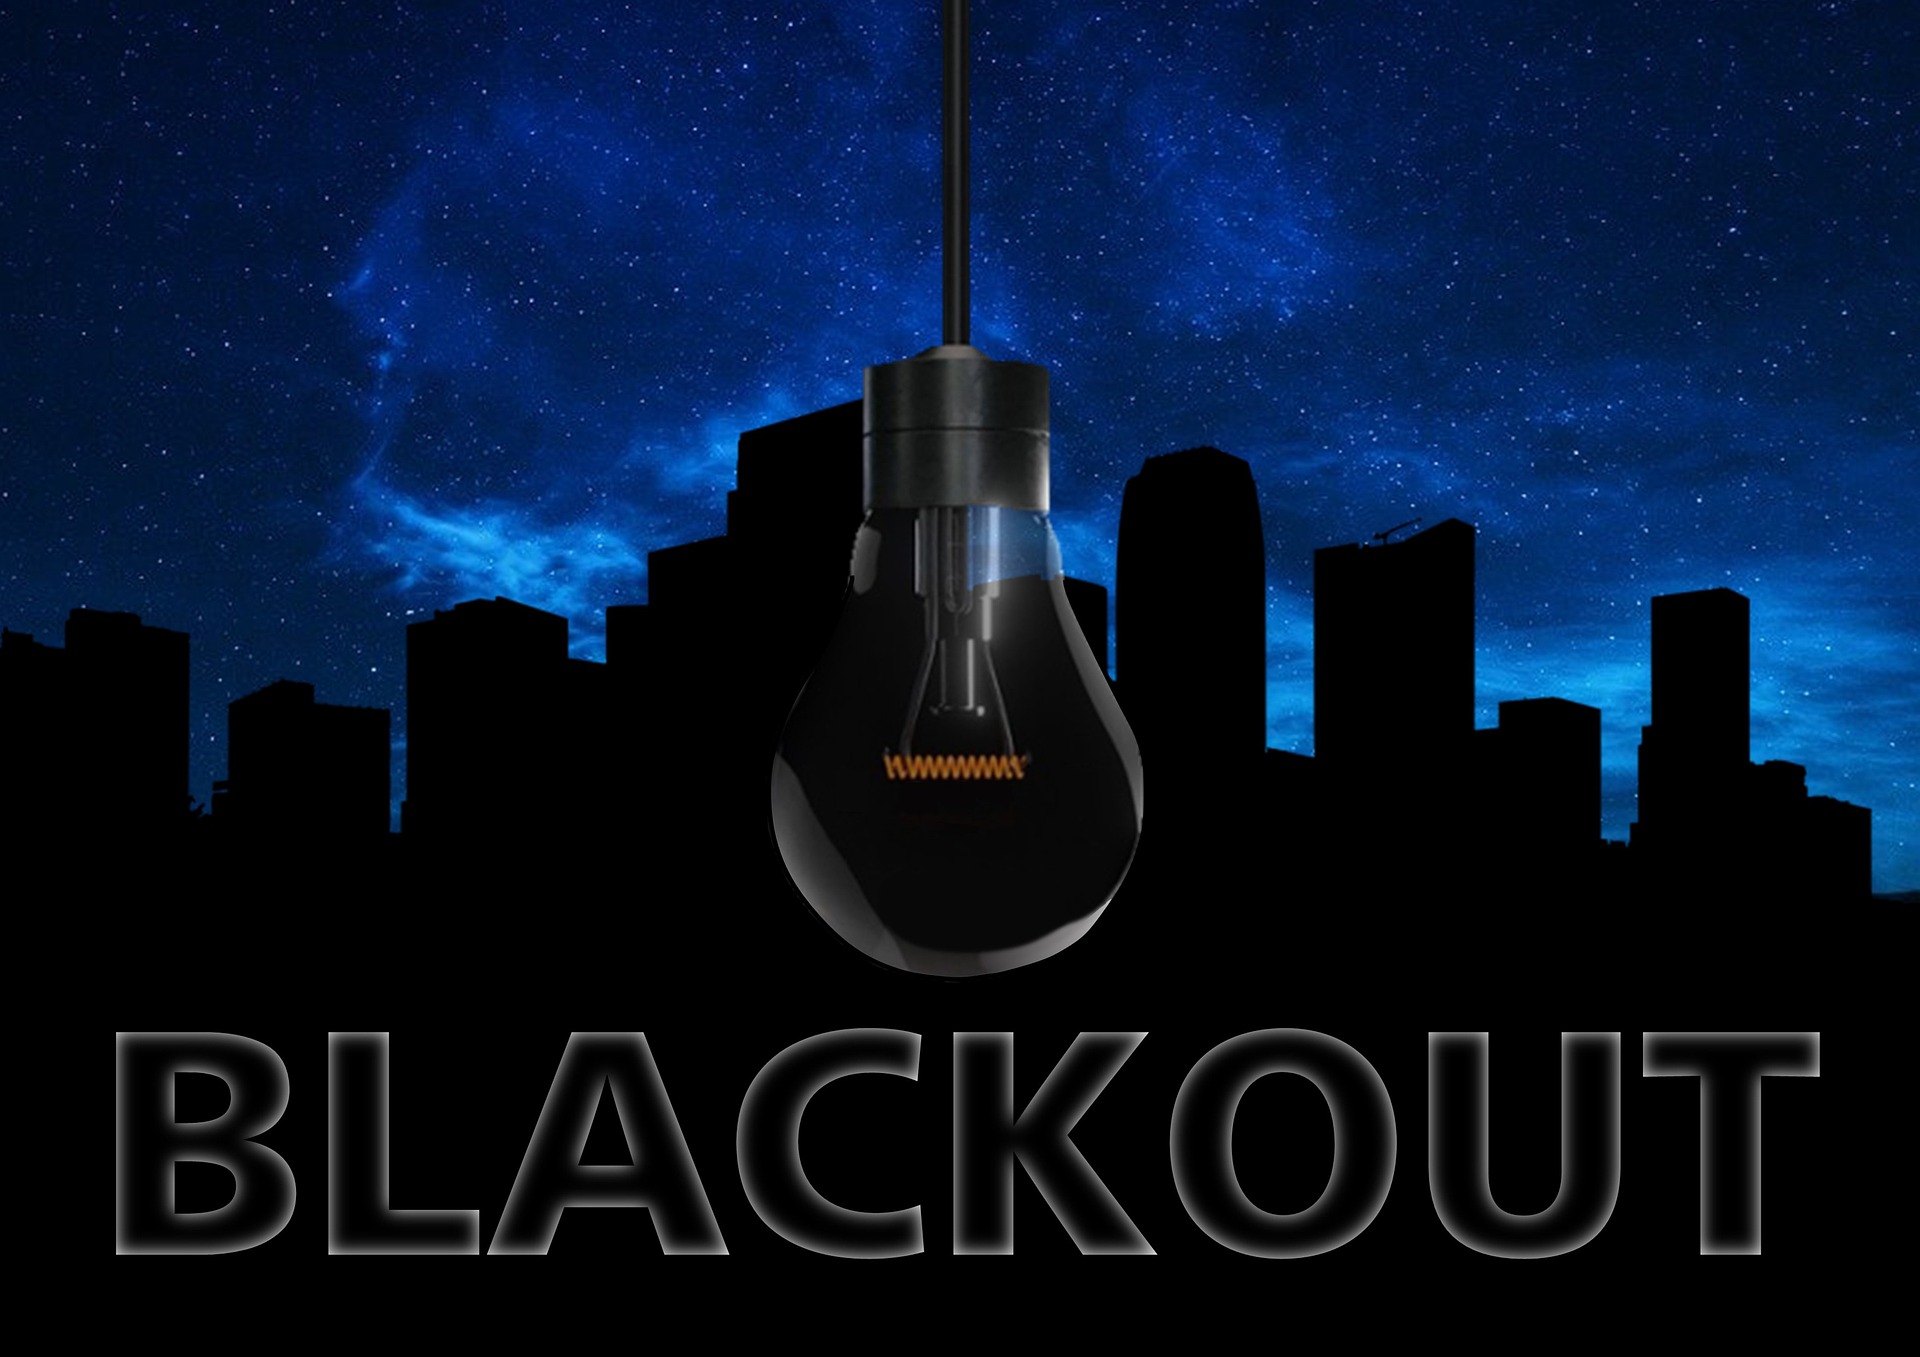 A blackout city with no lights on